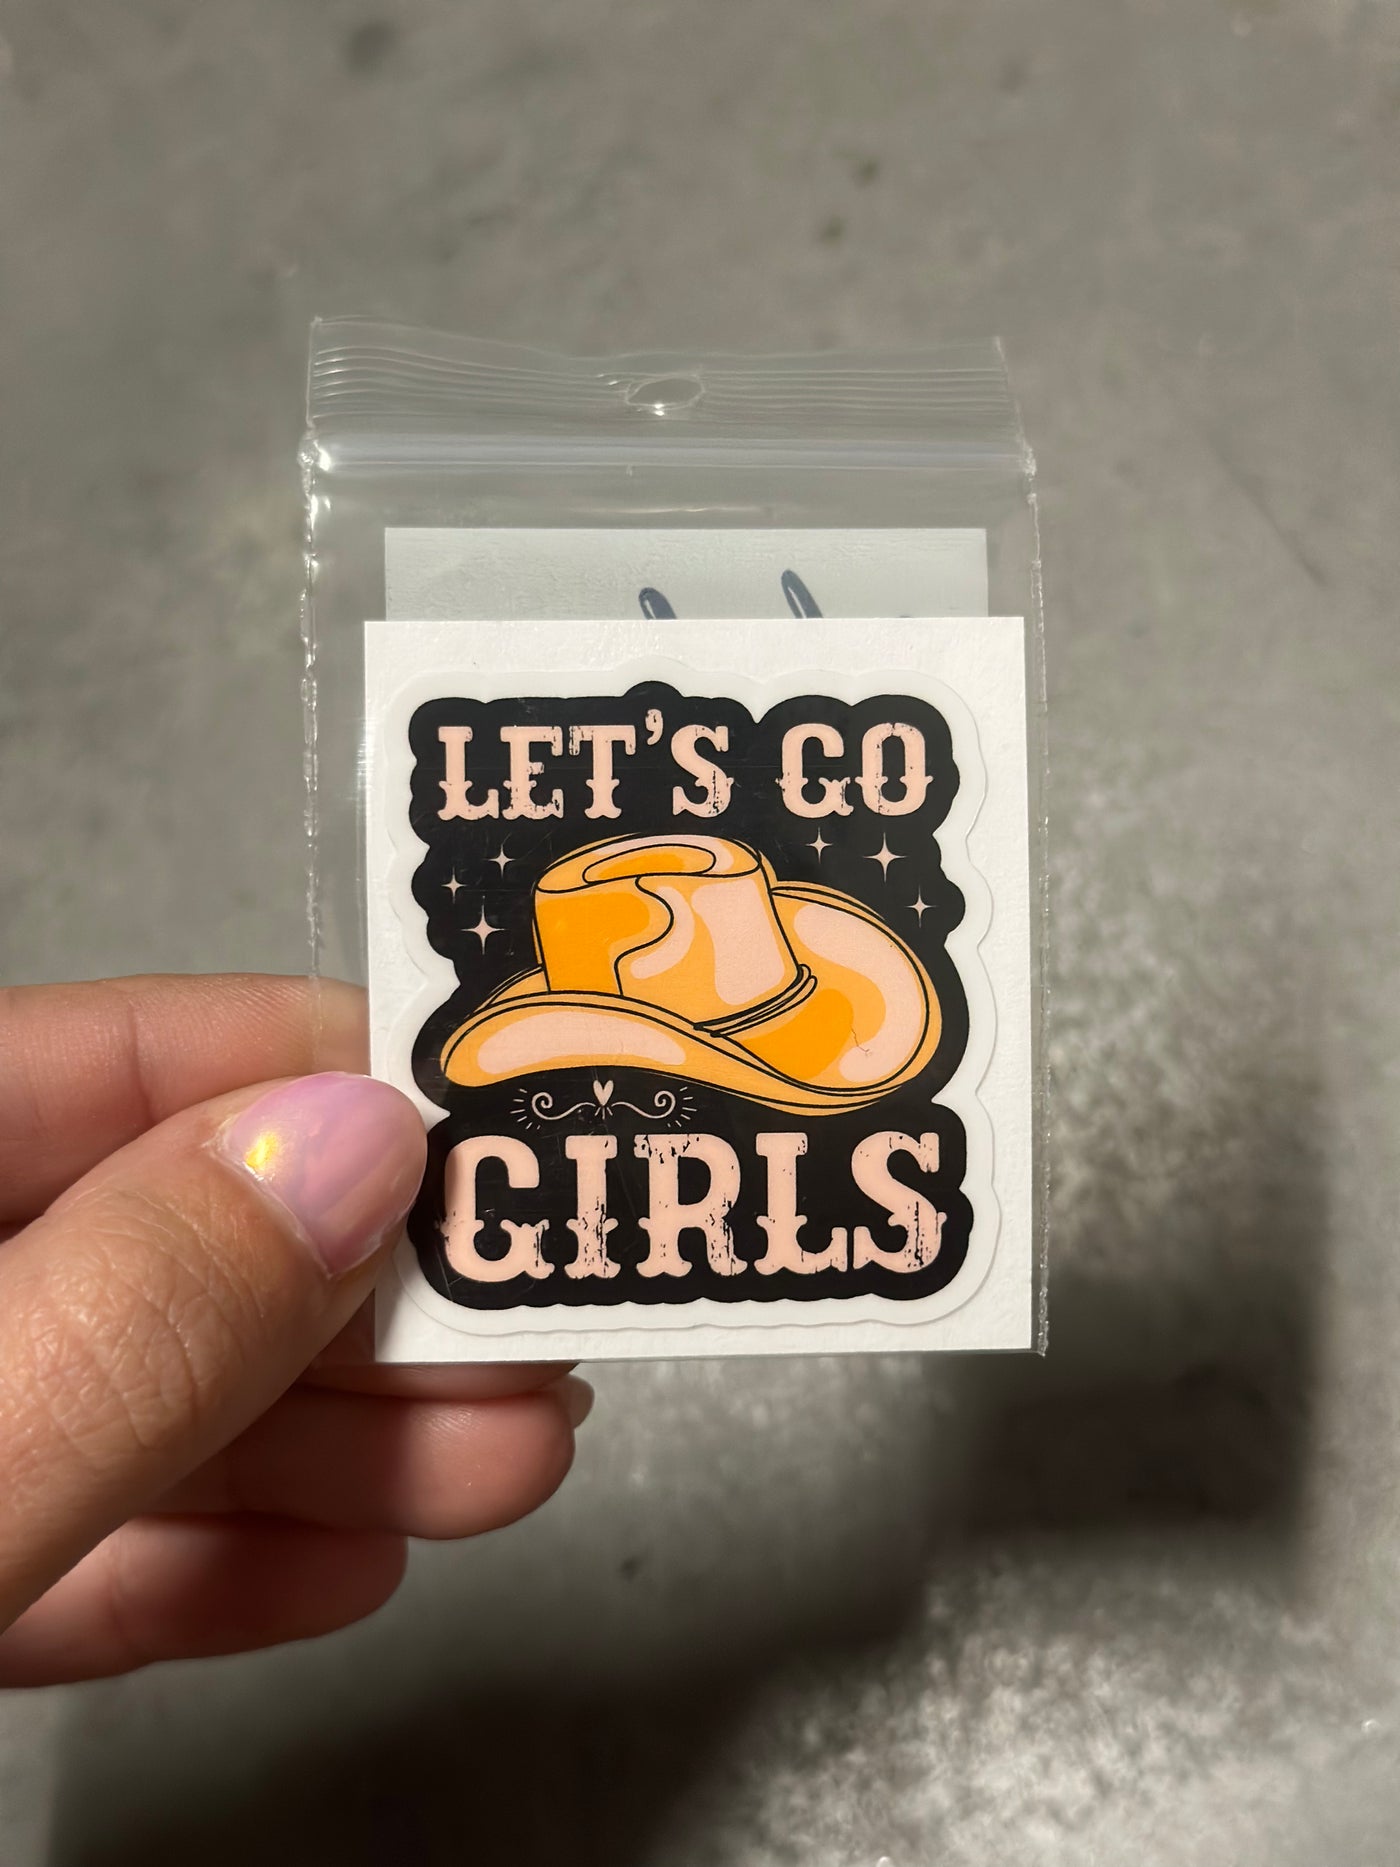 Let's go girls sticker